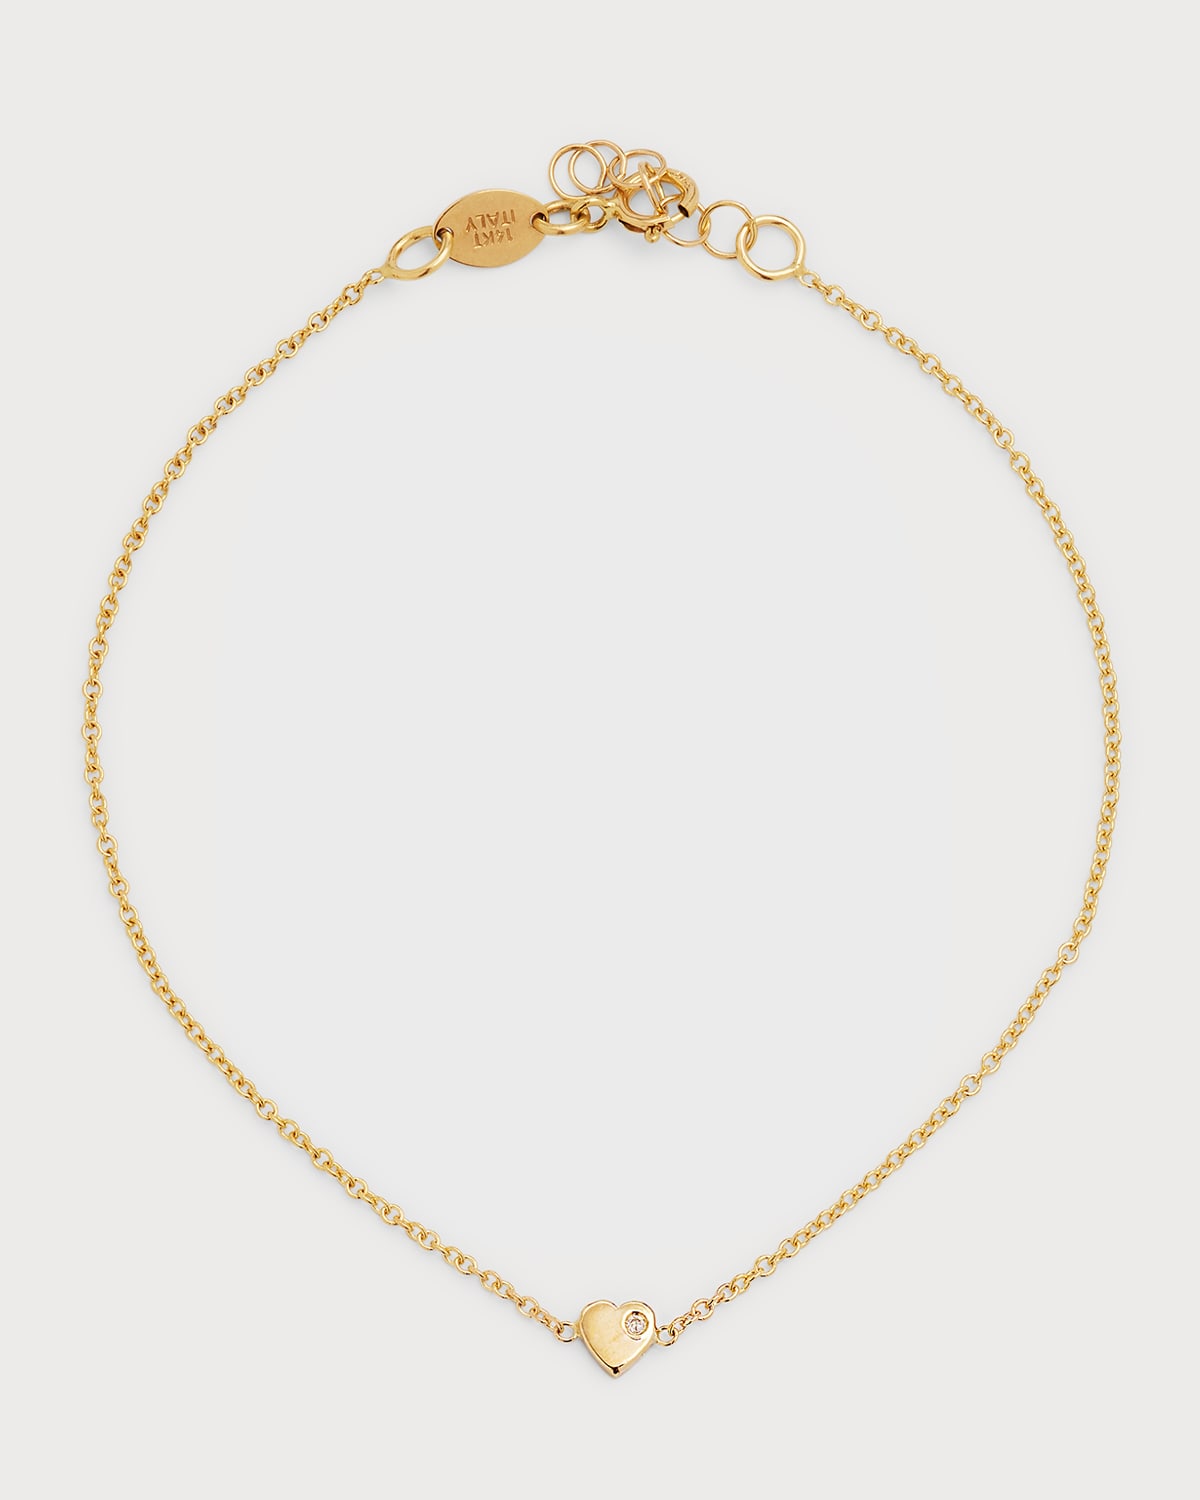 Zoe Lev Jewelry 14k Gold Tiny Heart Bracelet with Diamond